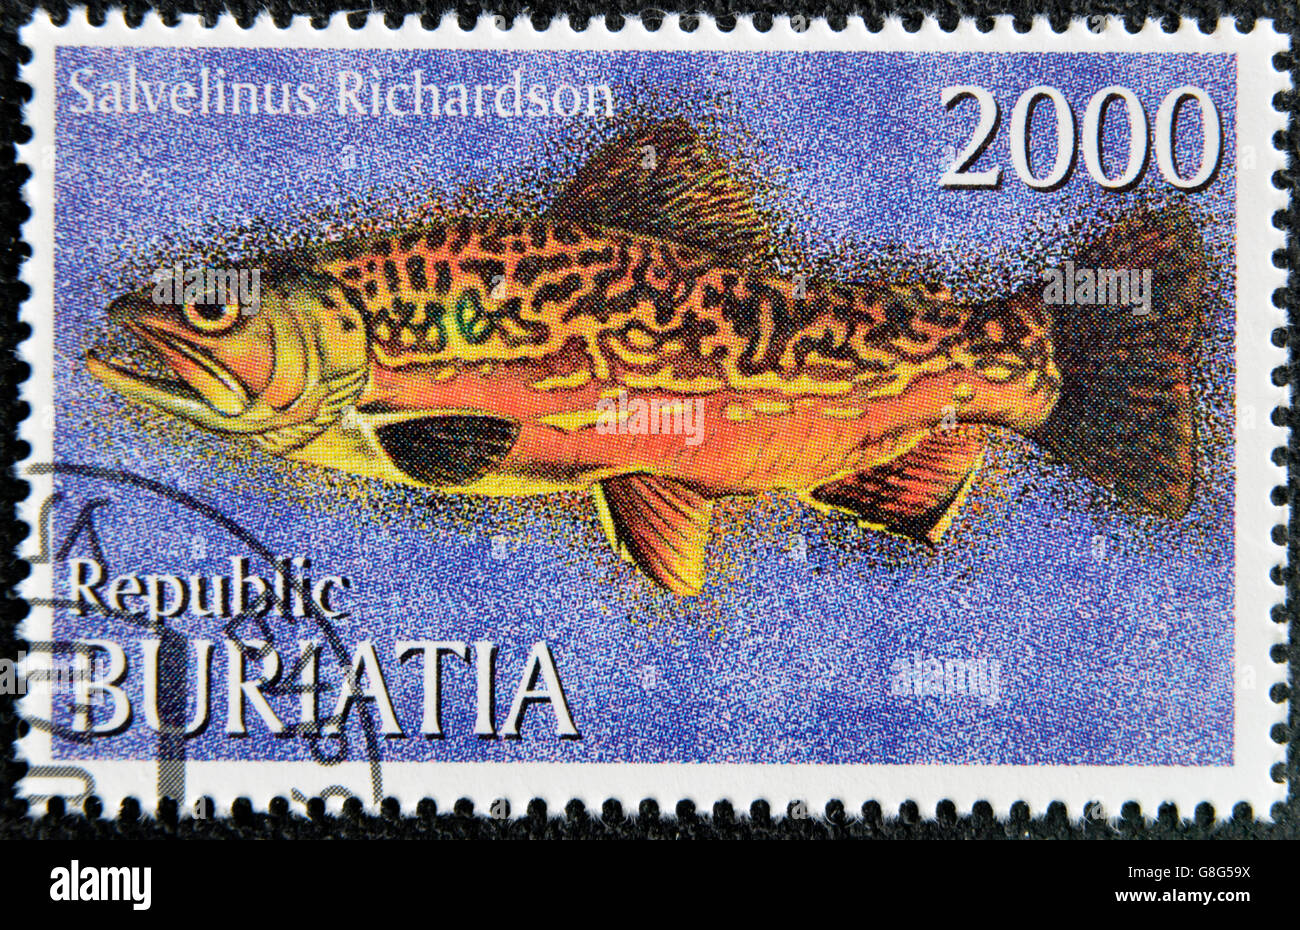 BURYATIA - CIRCA 1997: A stamp printed in Buryatia shows salvelinus richardson, circa 1997 Stock Photo